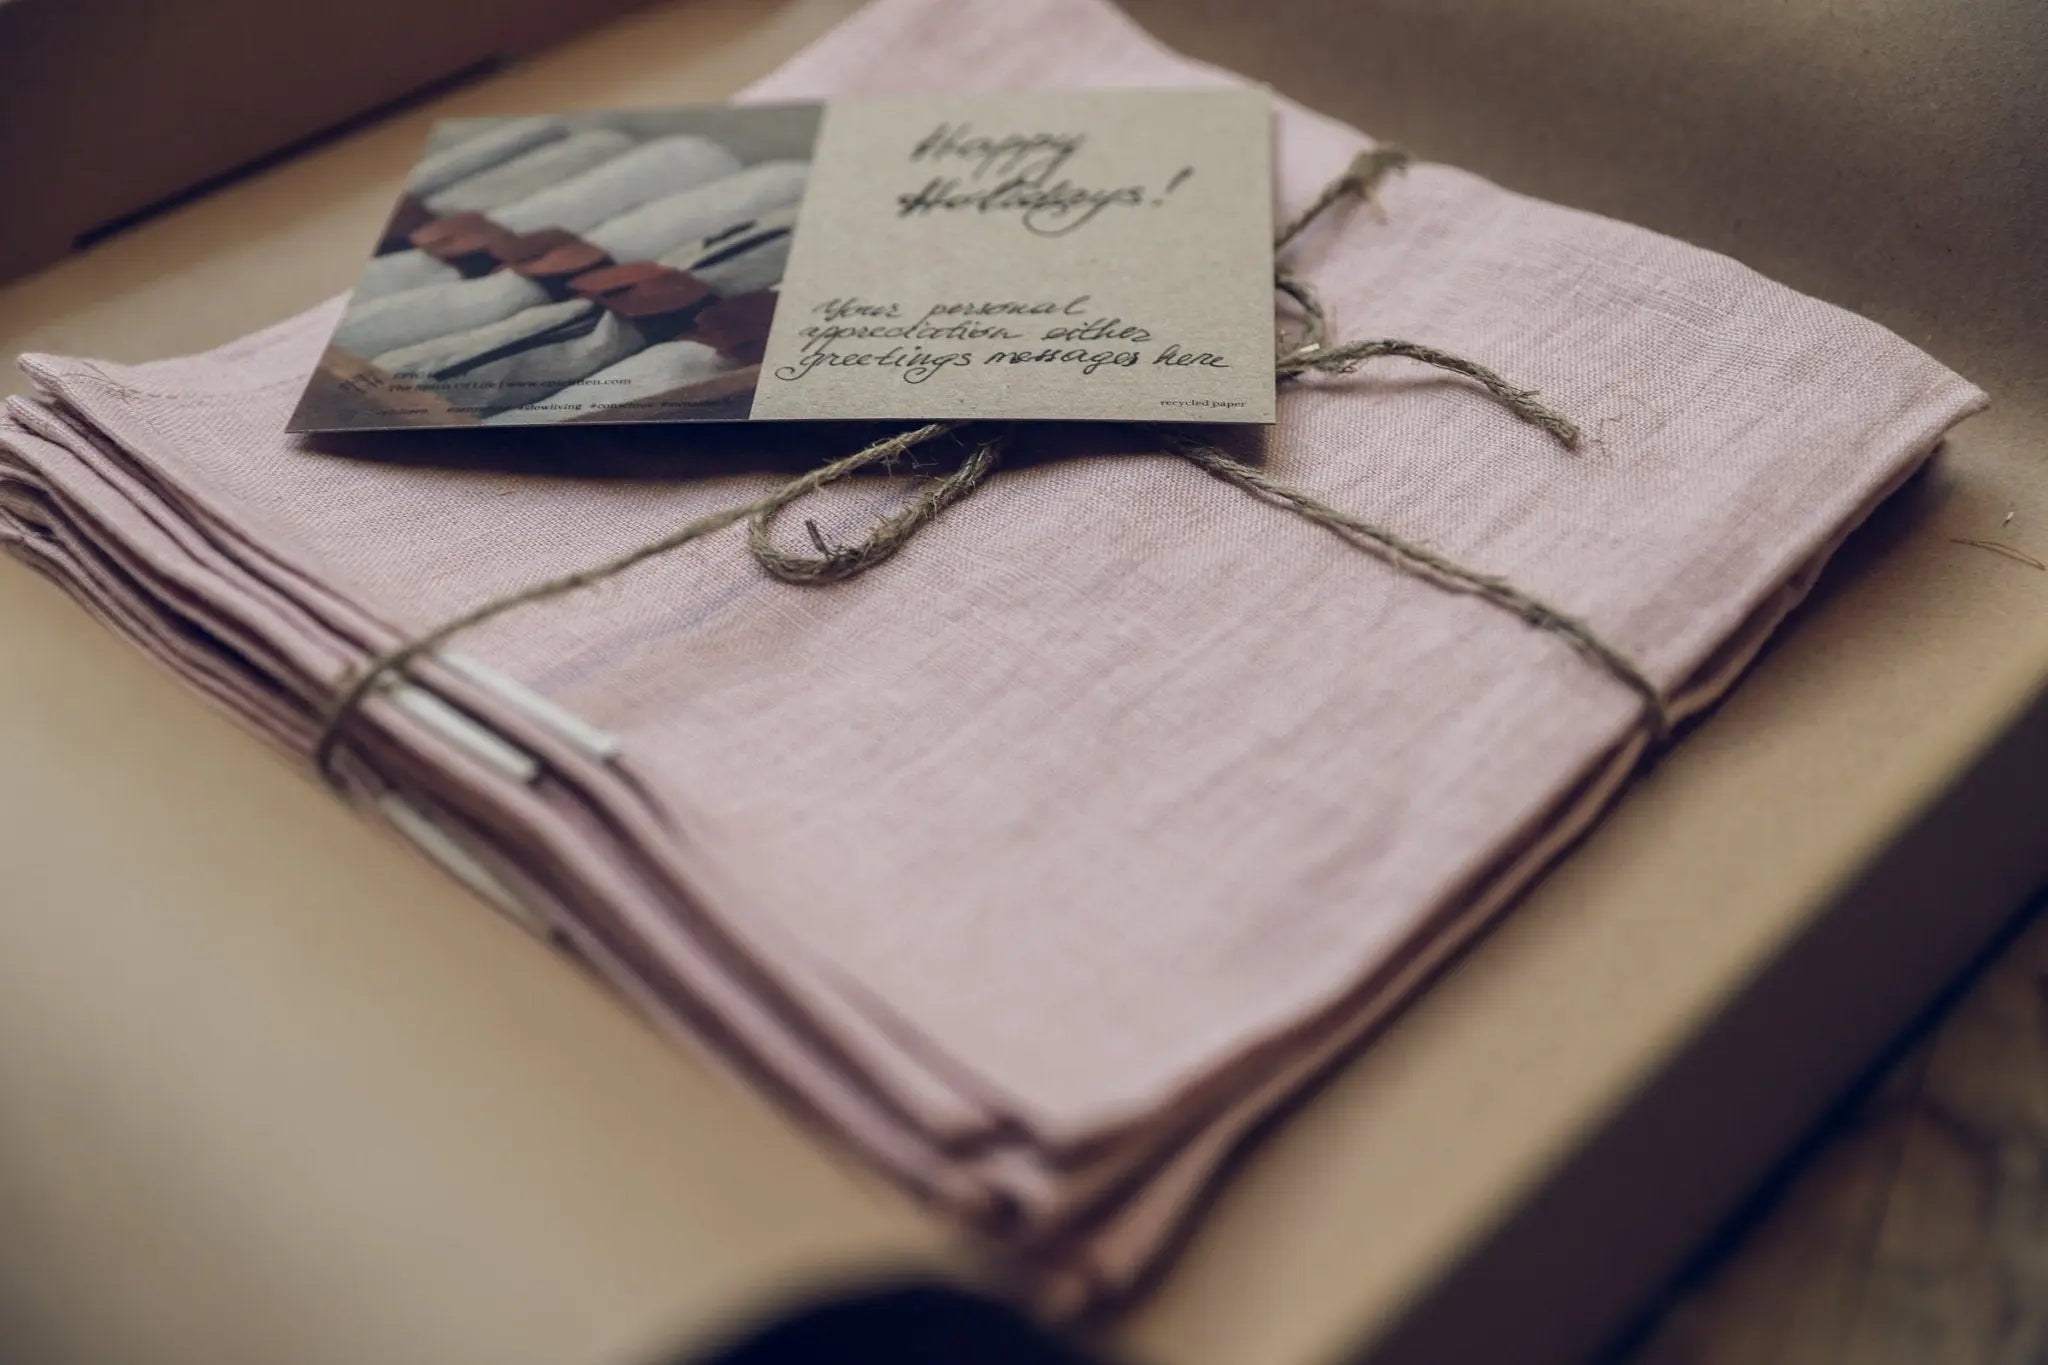 Set of 2 Soft Linen Napkins in a Gift Box - Epic Linen luxury linen